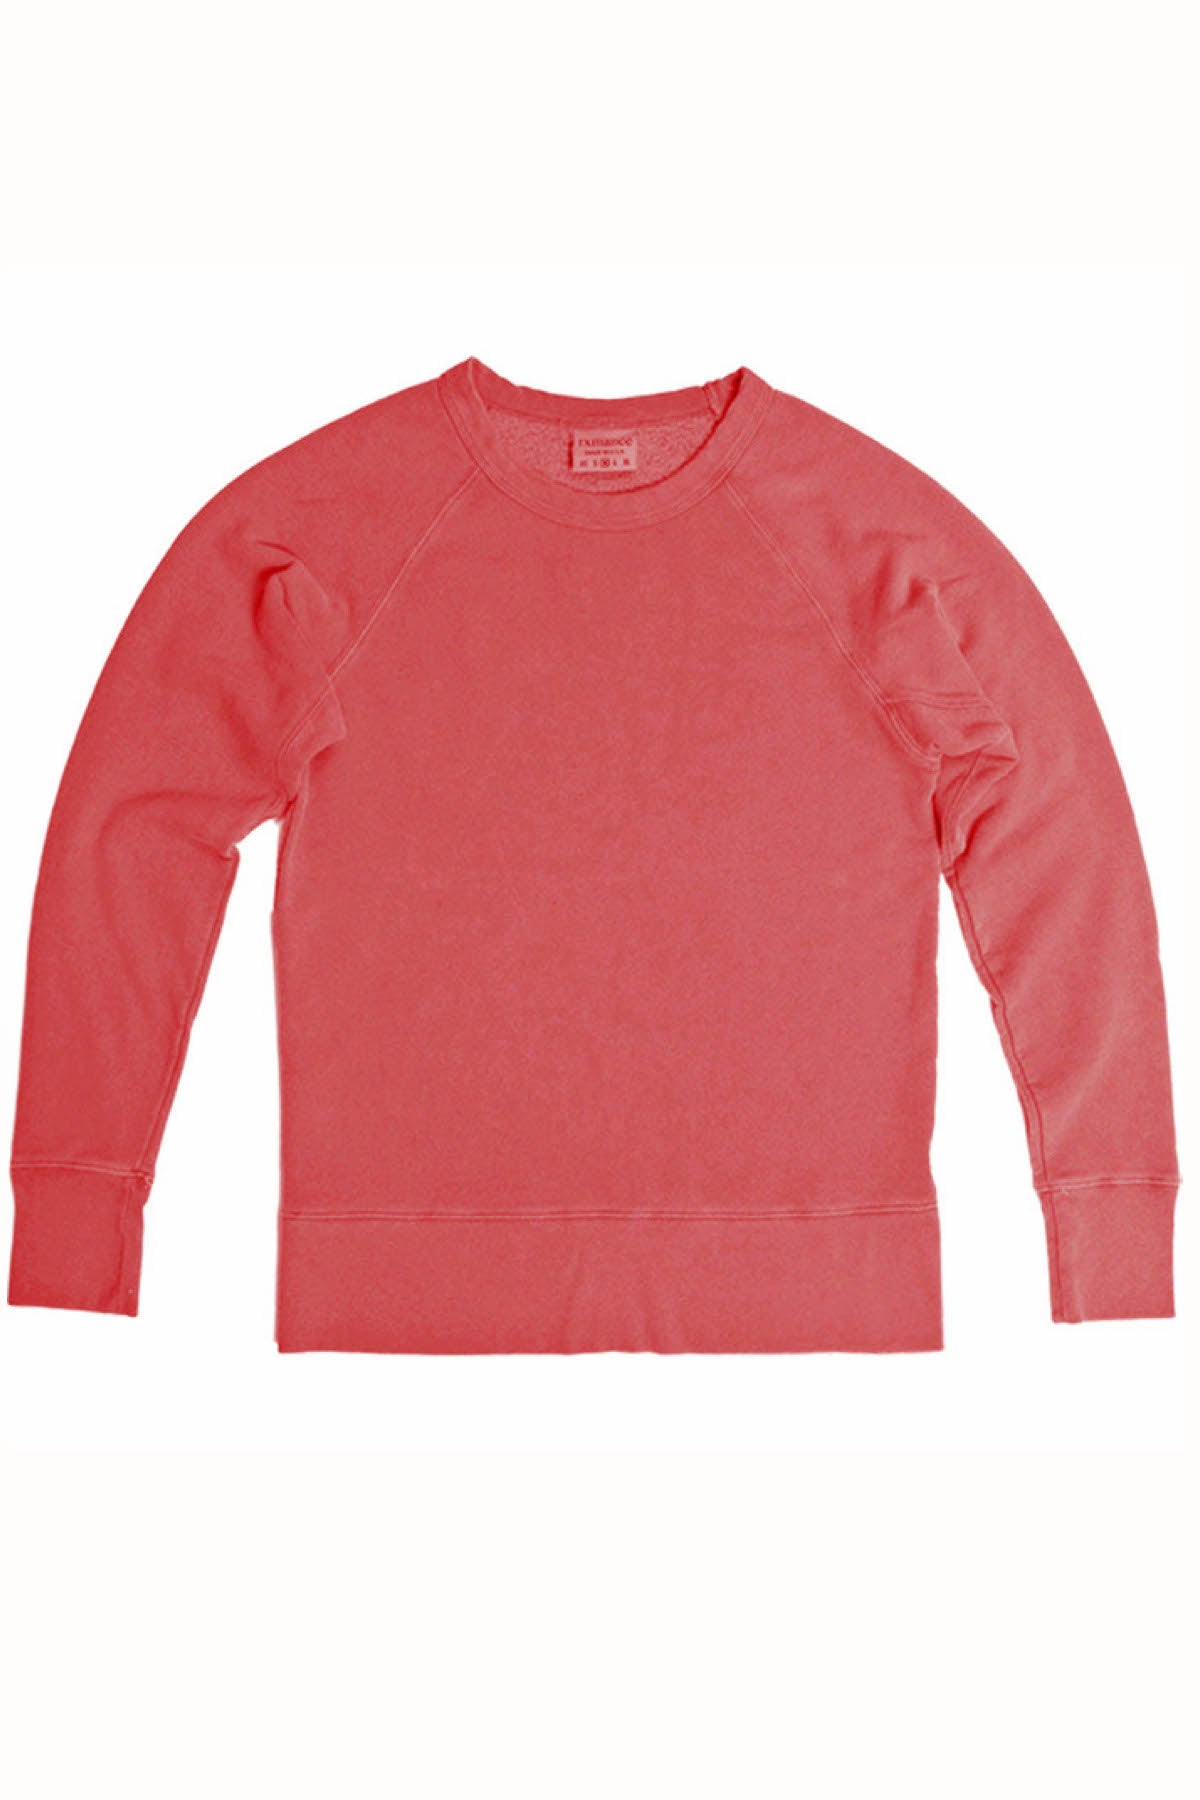 Rxmance Unisex Faded Red Sweatshirt